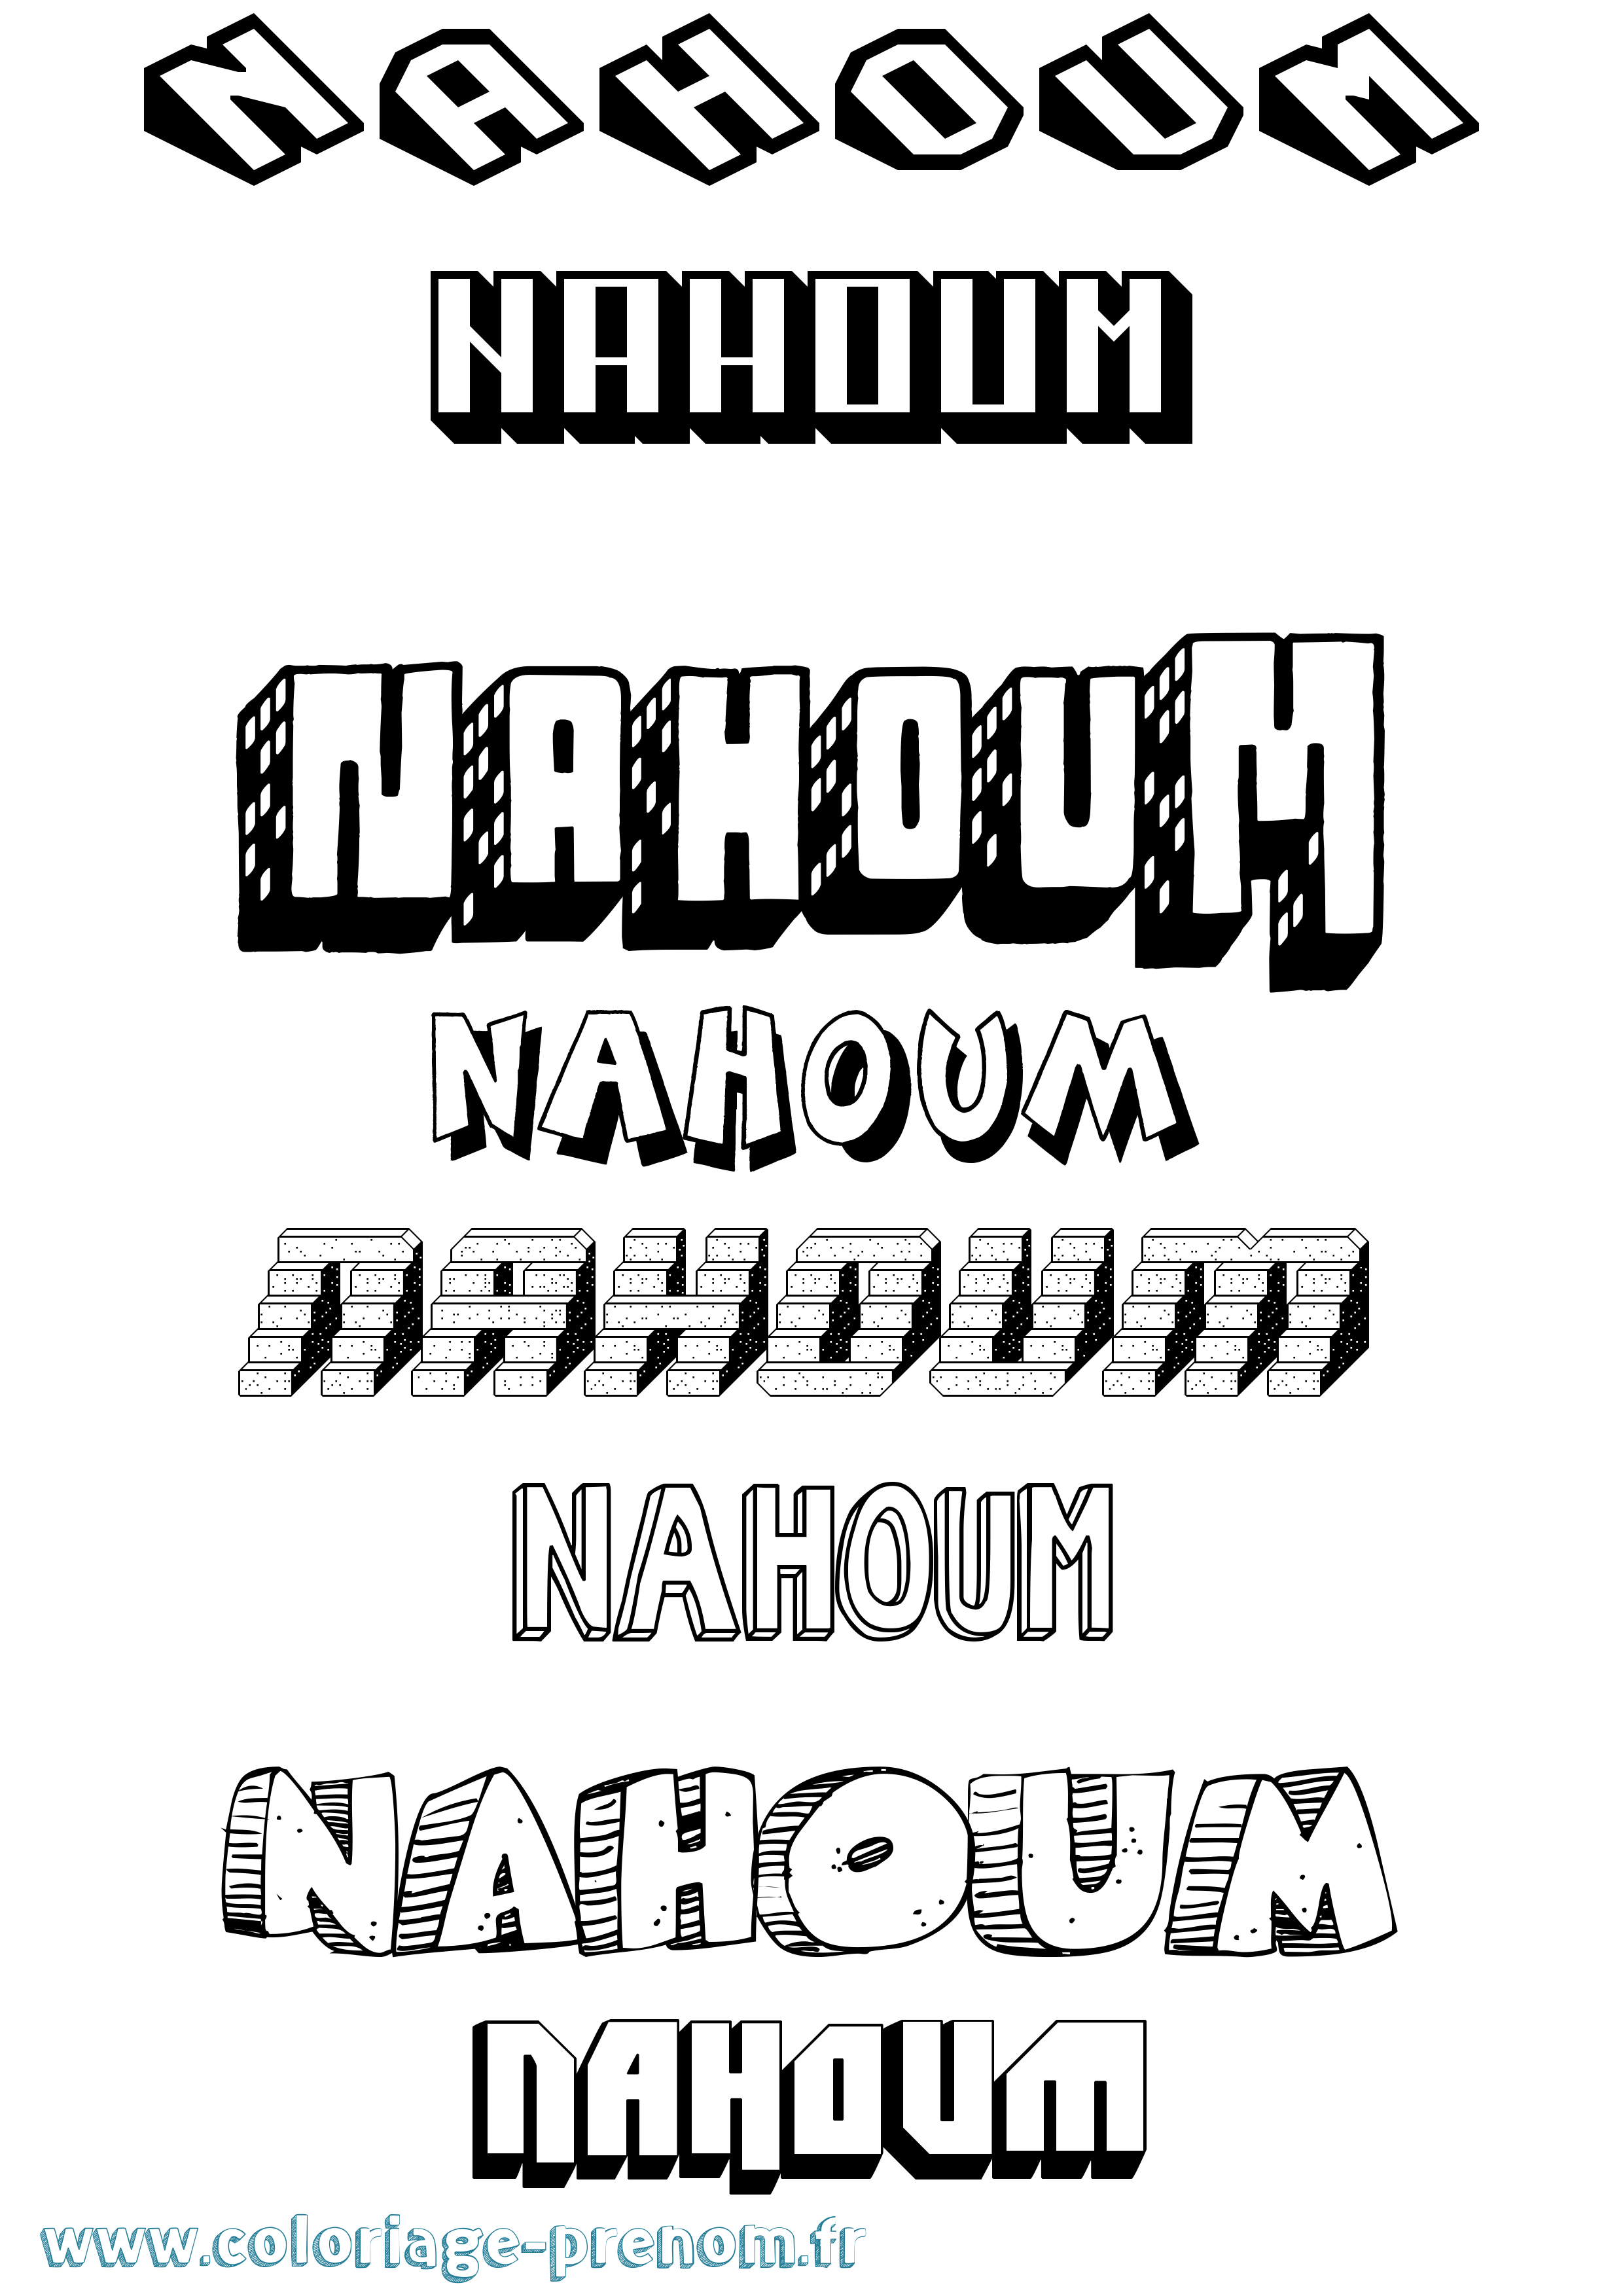 Coloriage prénom Nahoum Effet 3D